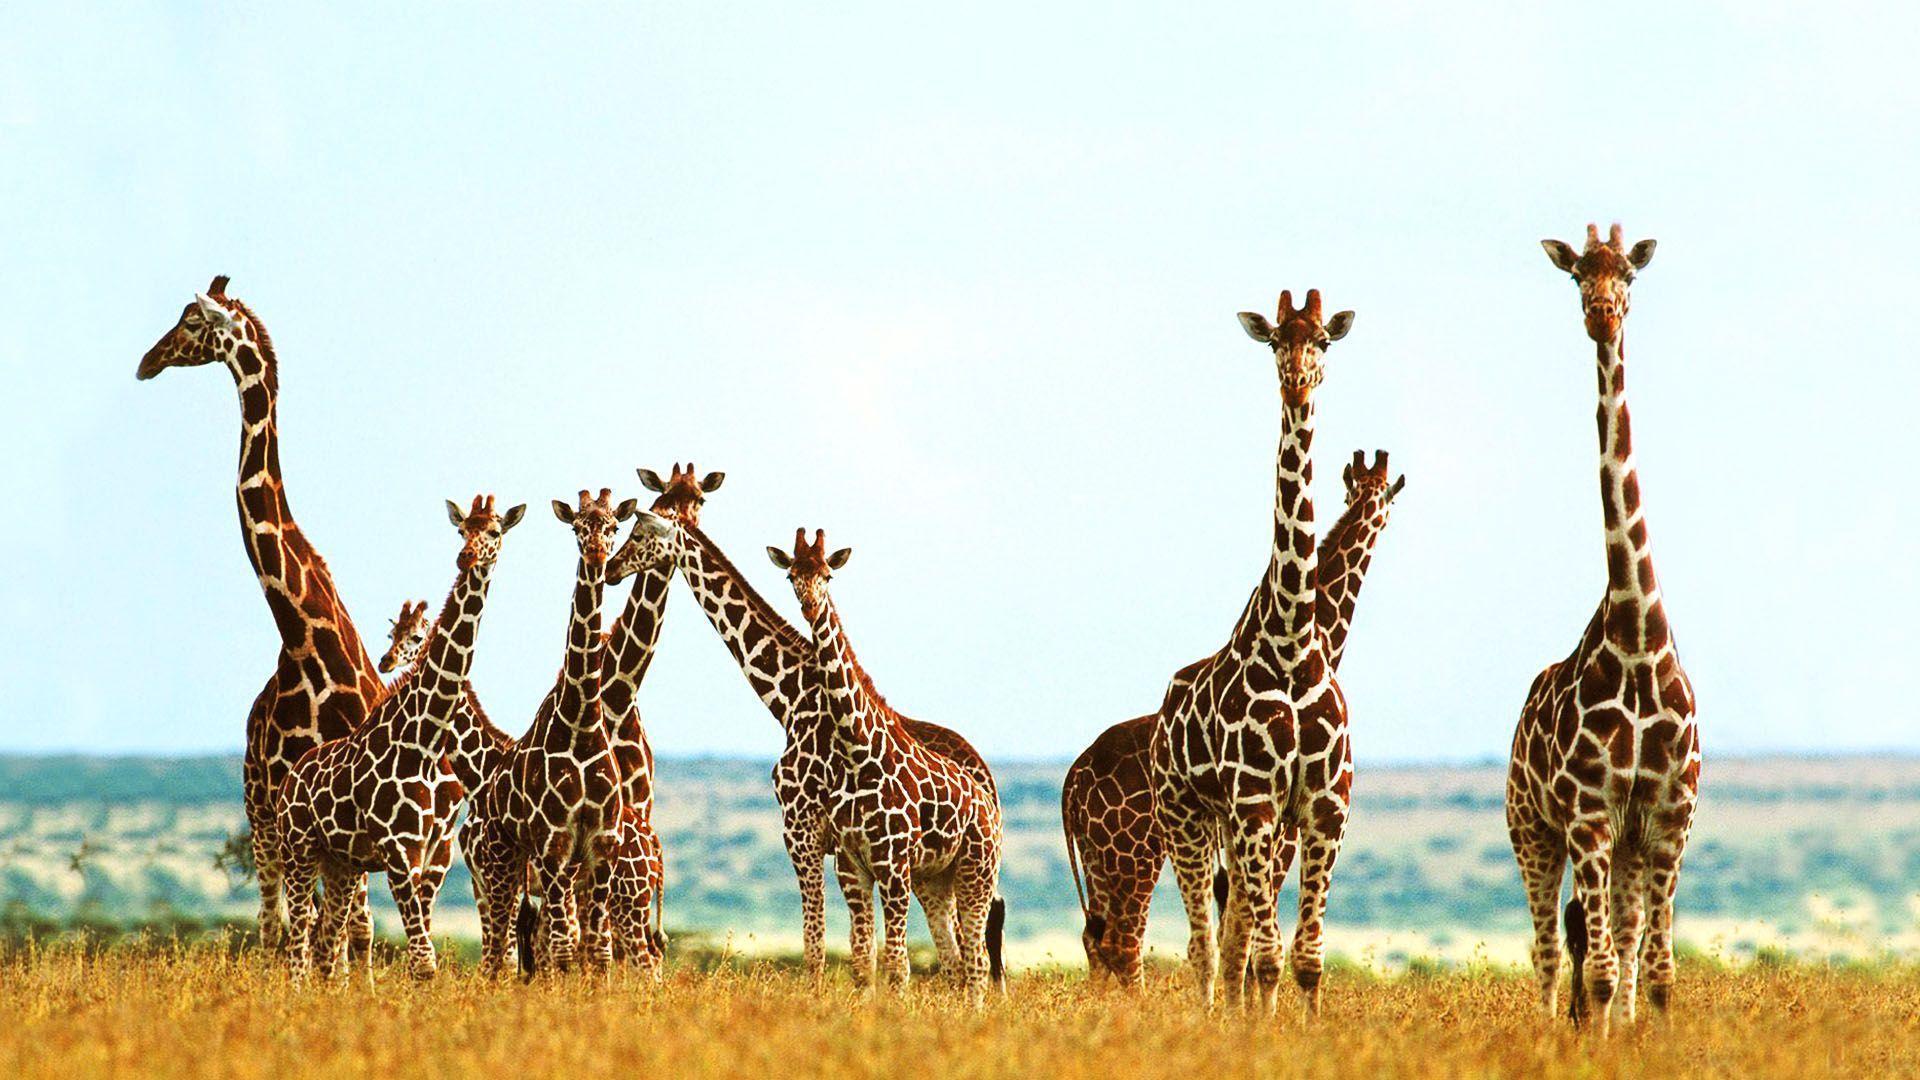 Giraffe HD Wallpaper. Giraffe Animal Picture